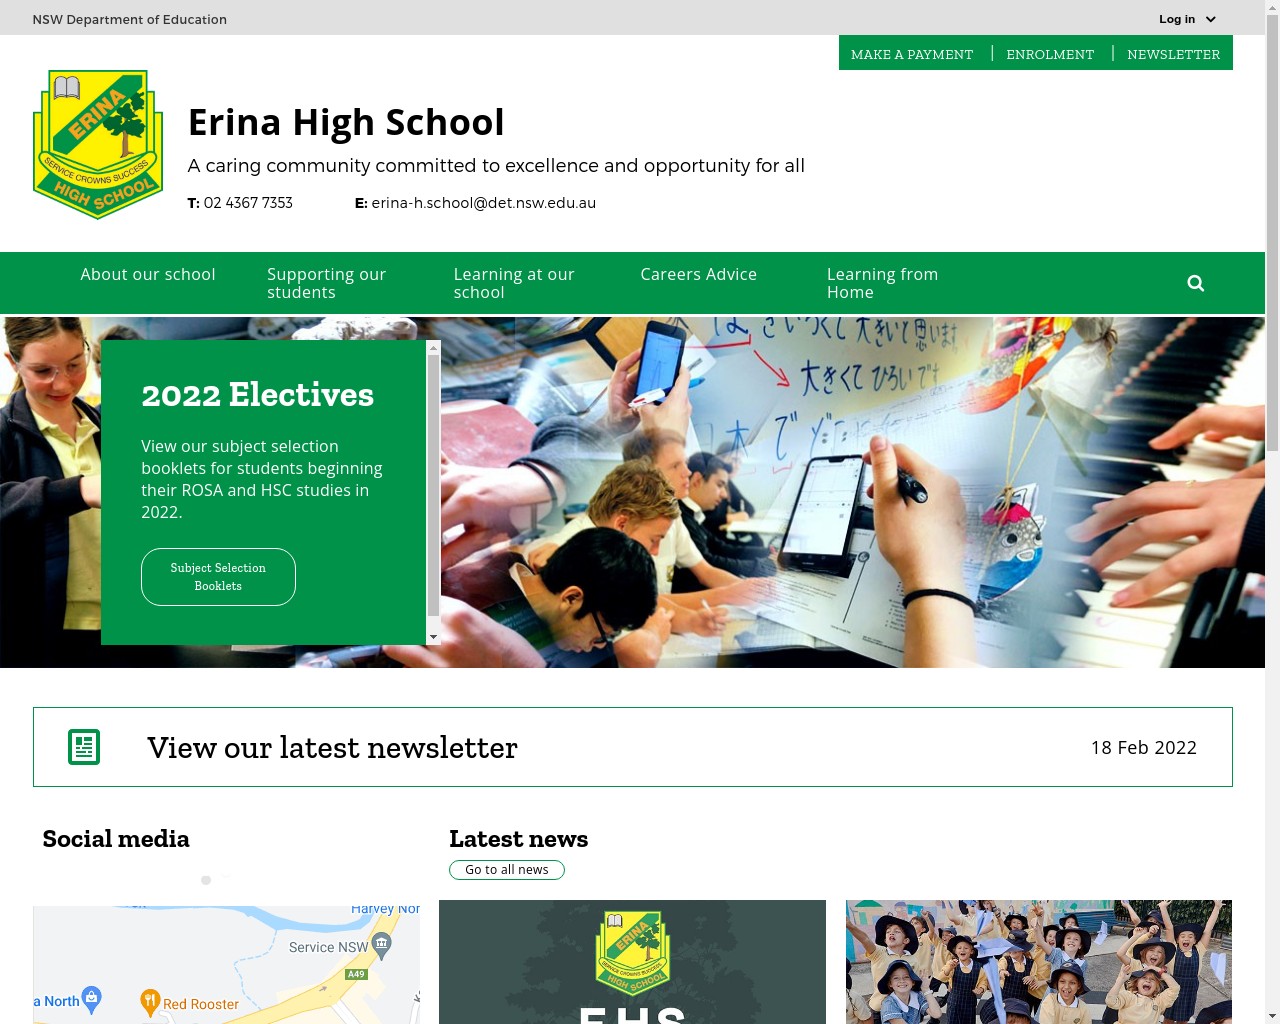 Erina High School